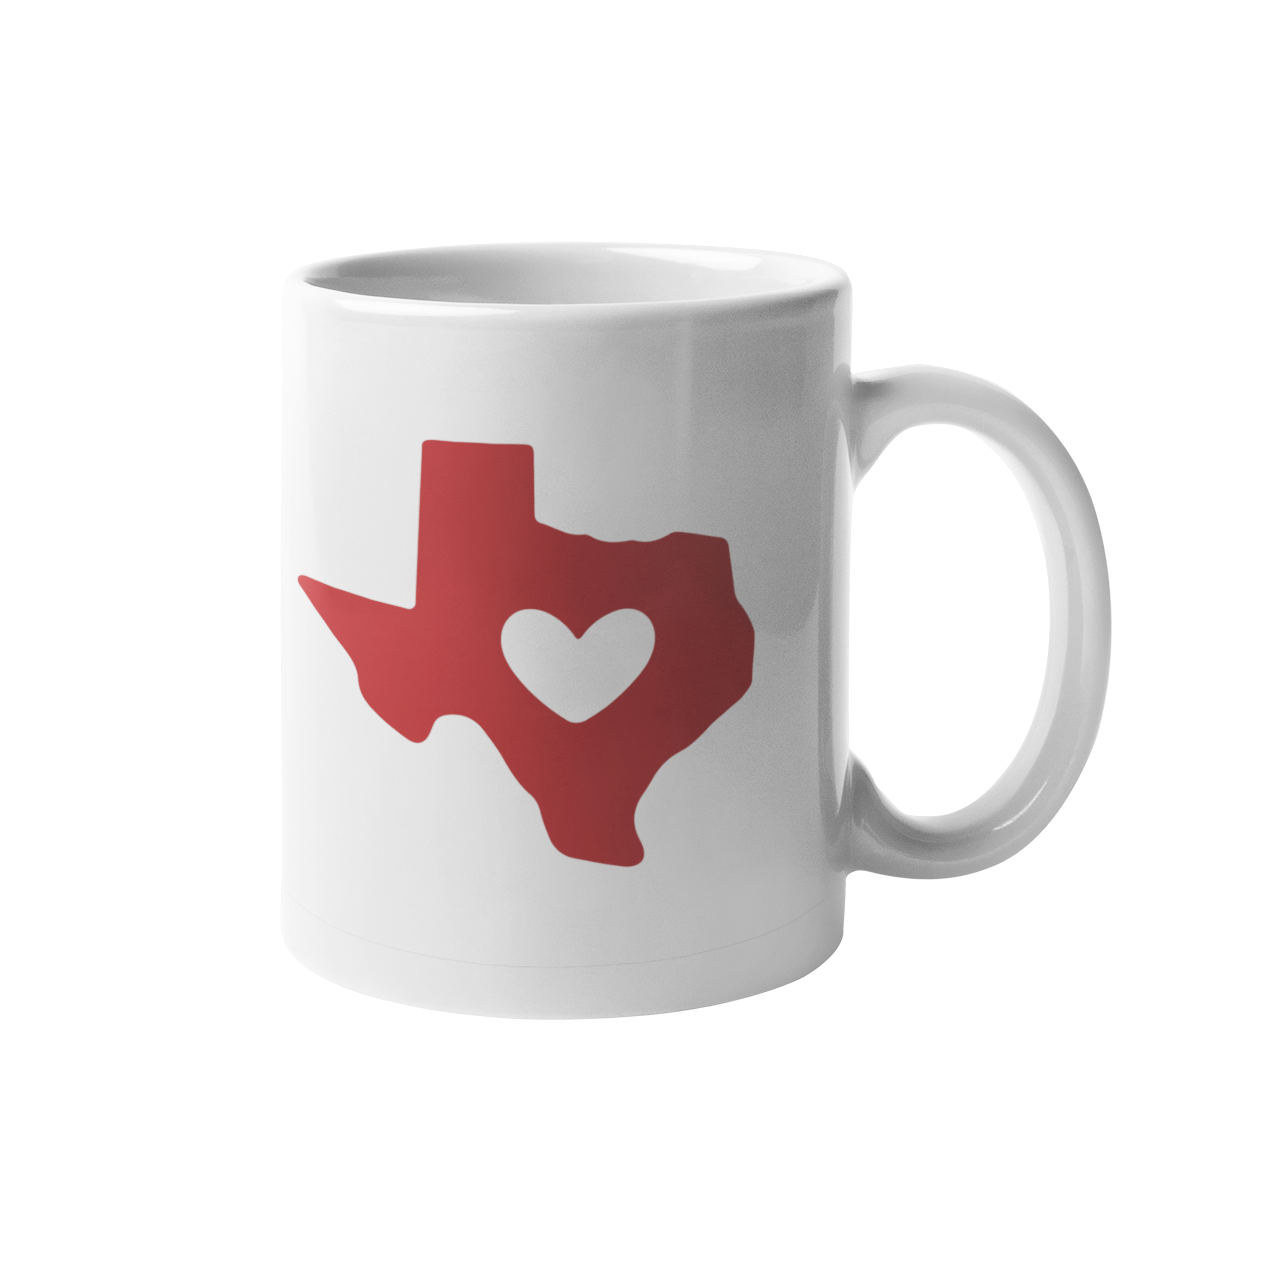 Heart of Texas Mug